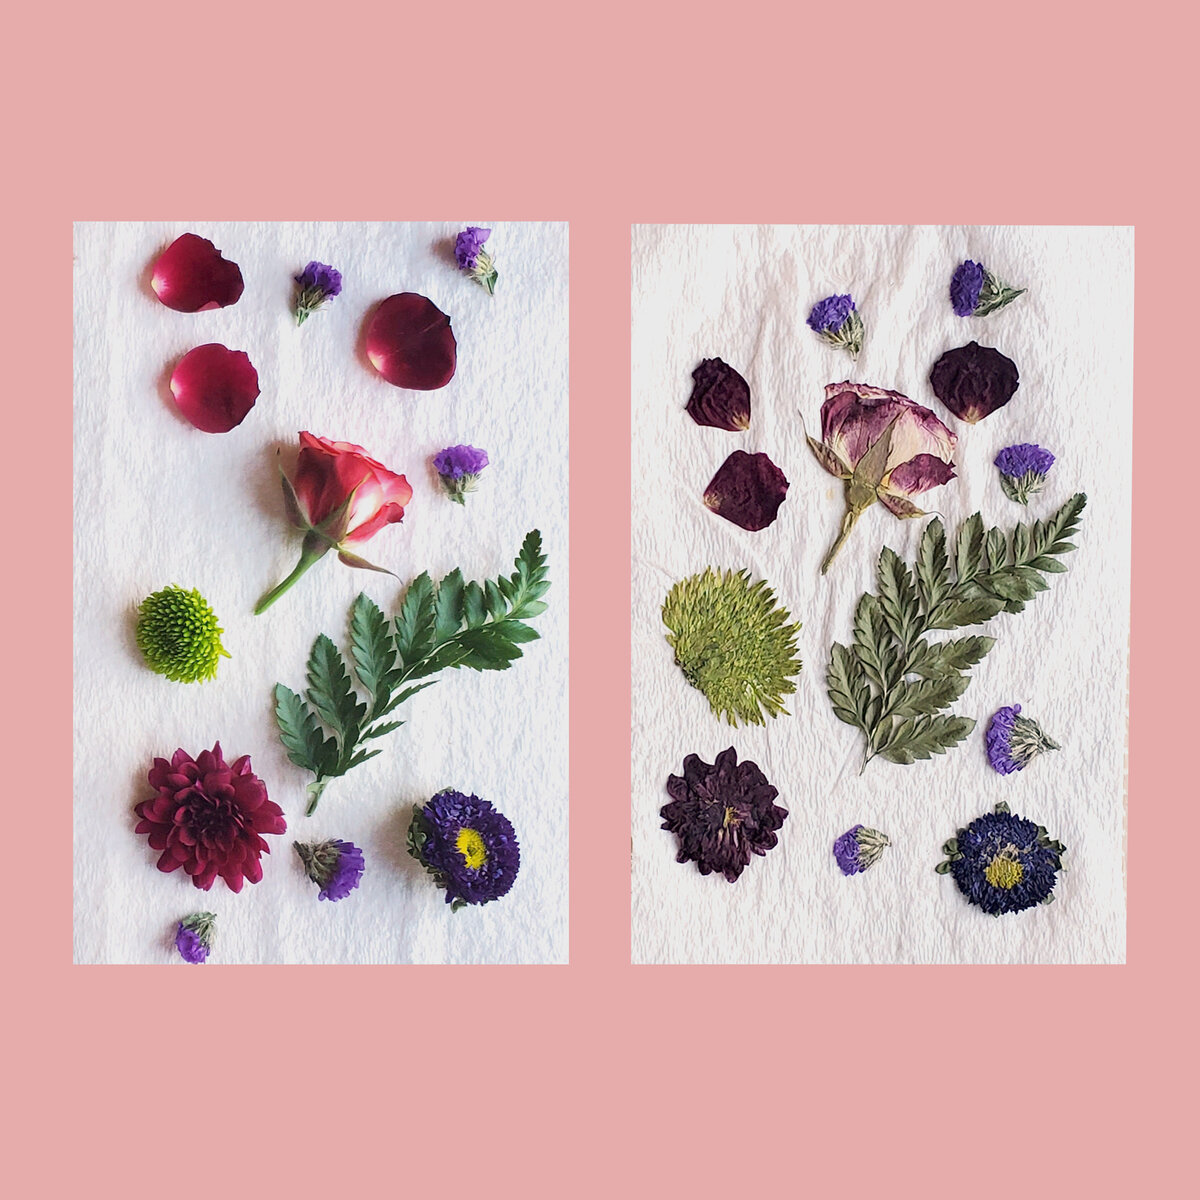 Get Floral With DIY Pressed Flower Crafts